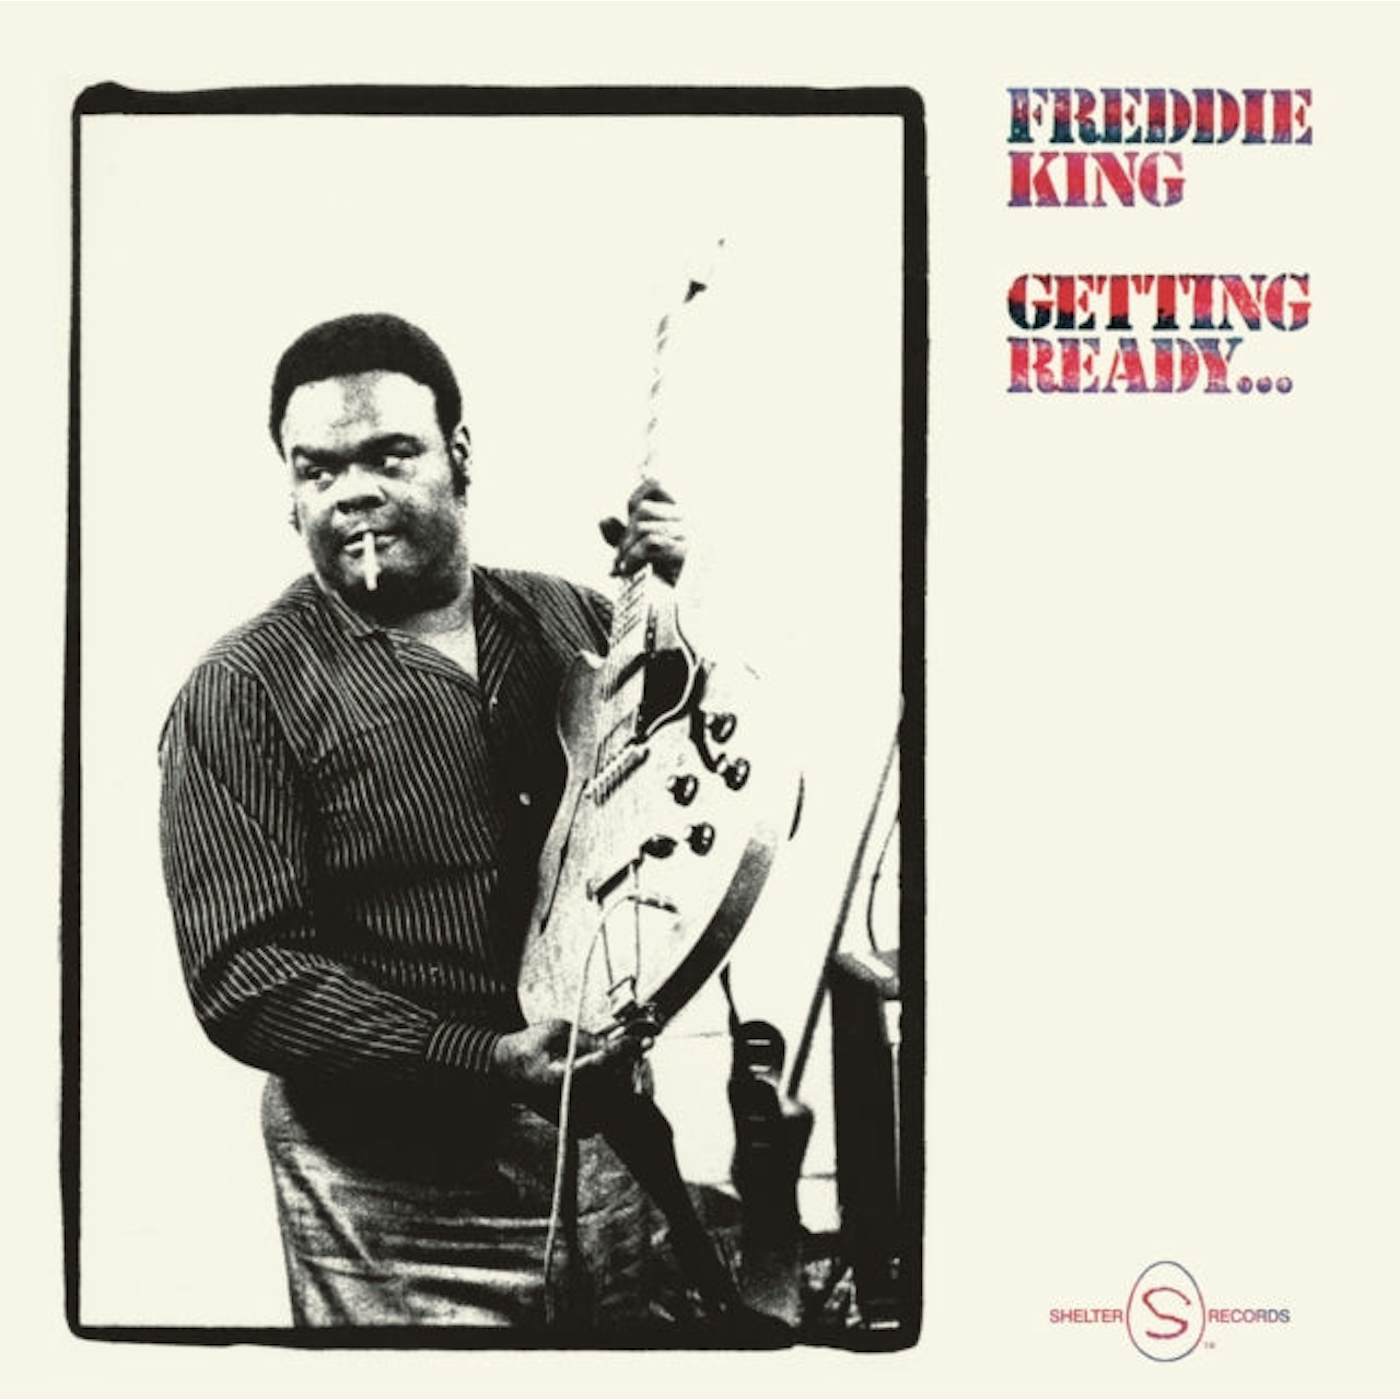 Freddie King LP Vinyl Record - Getting Ready... (Limited Edition)